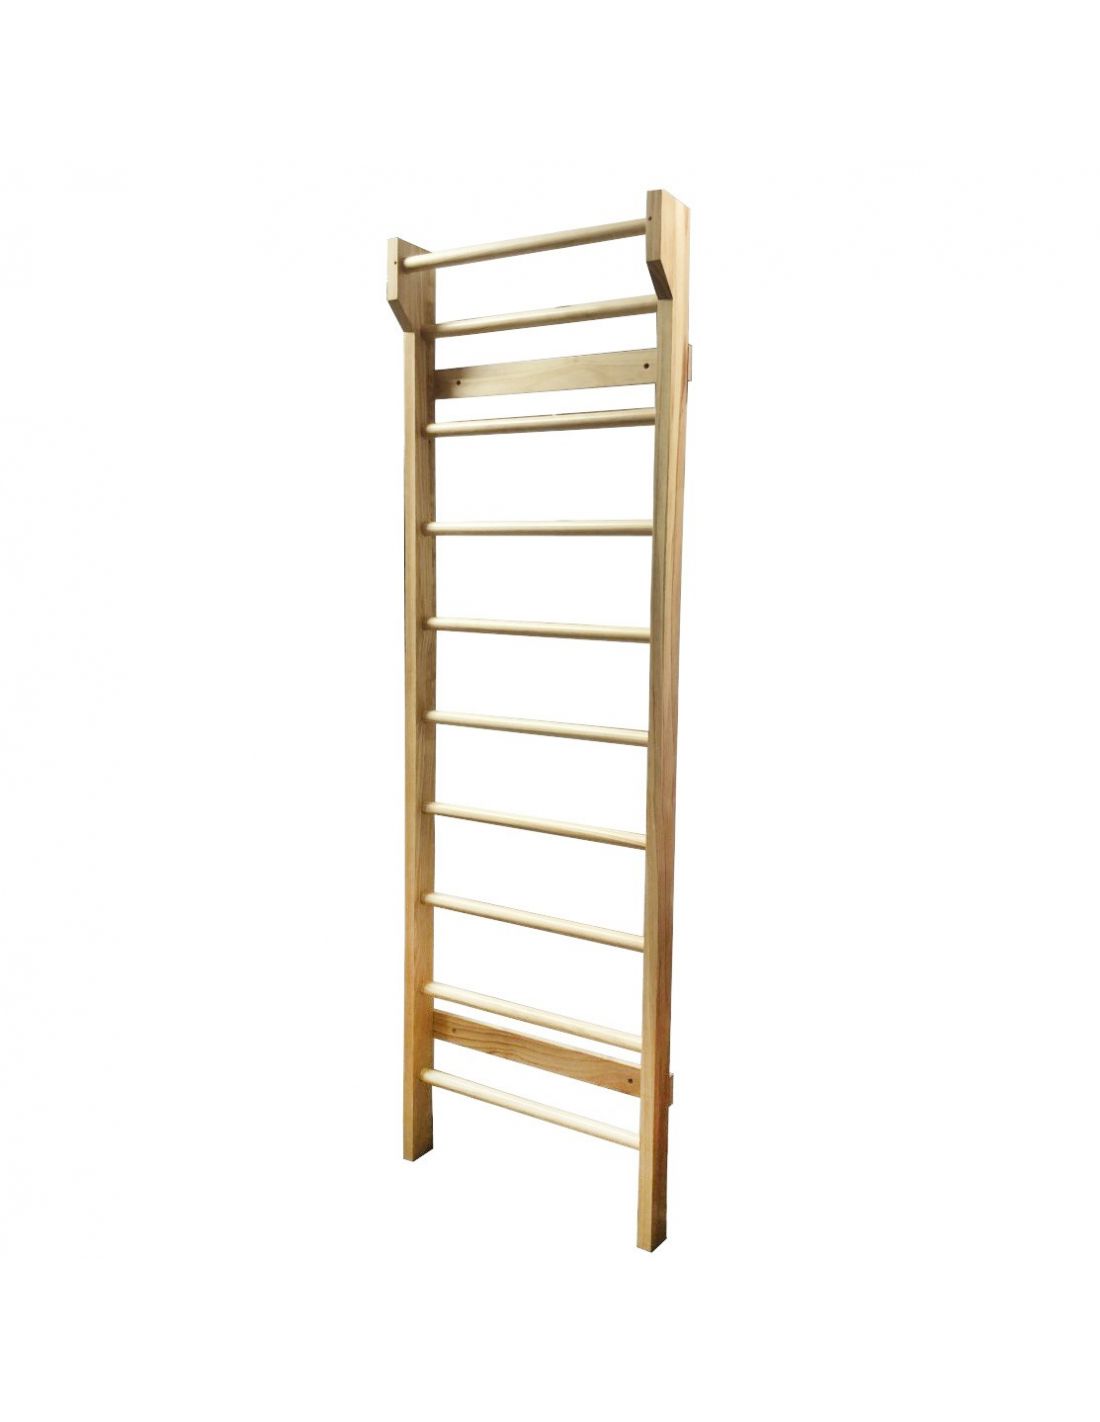 Home Swedish Ladder Wall Bar Dimensions: - Height: 225cm